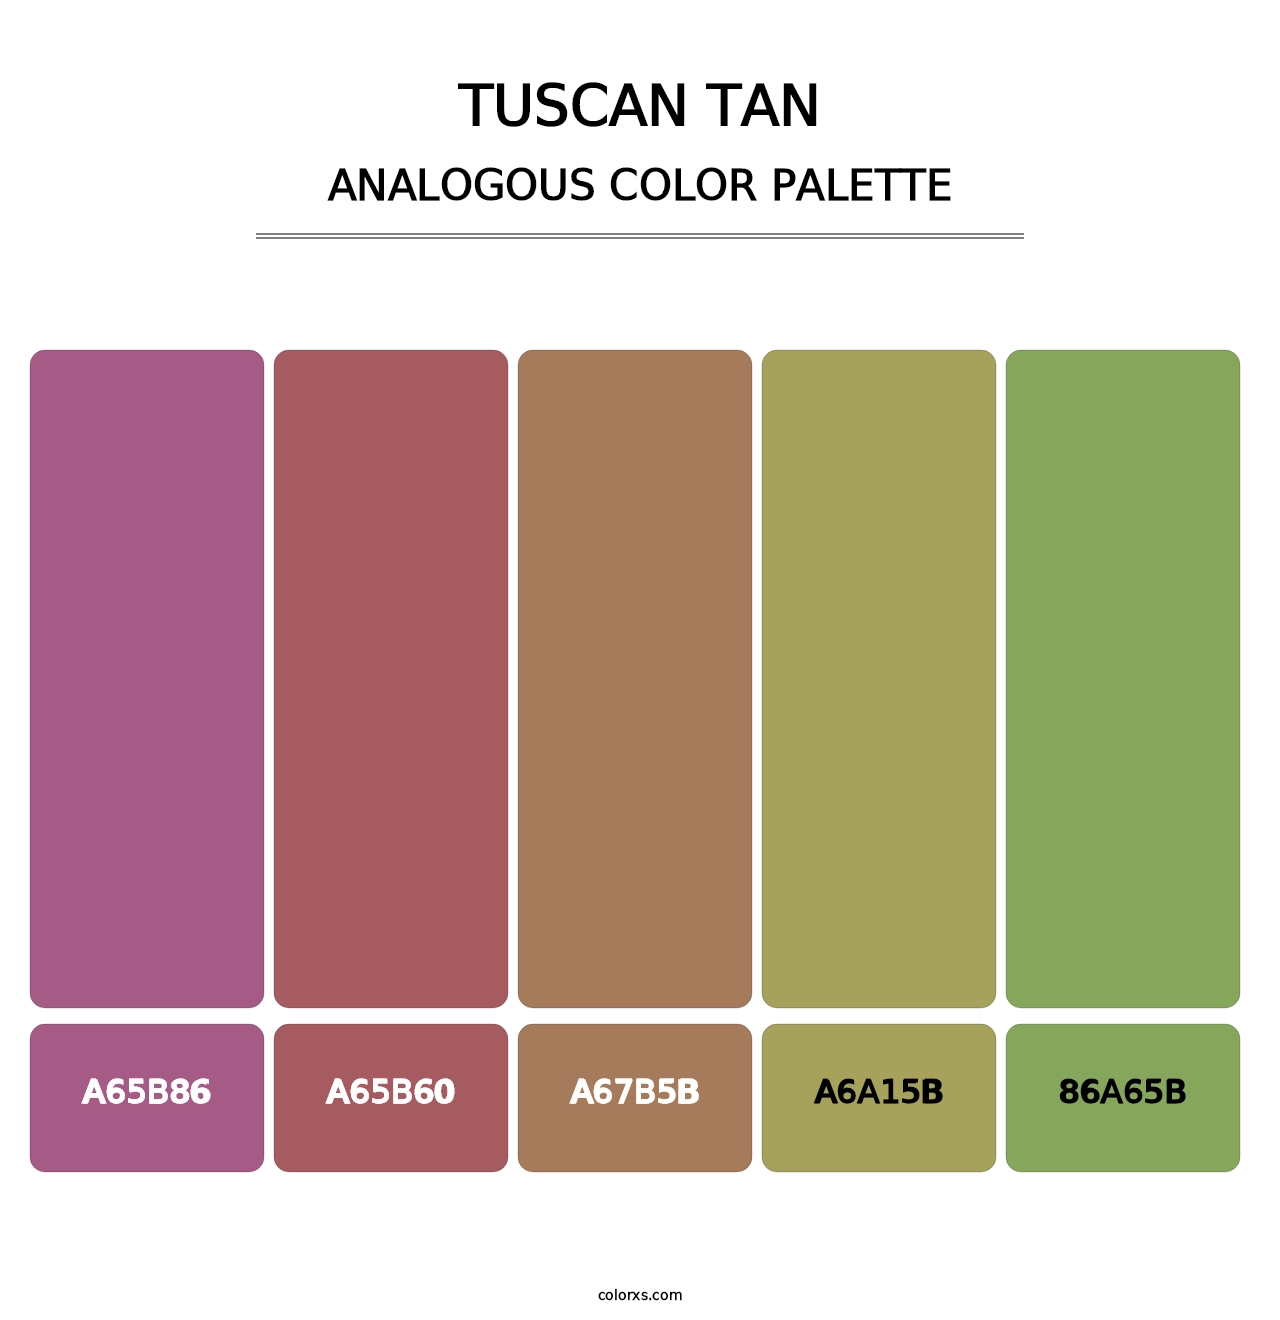 Tuscan Tan - Analogous Color Palette